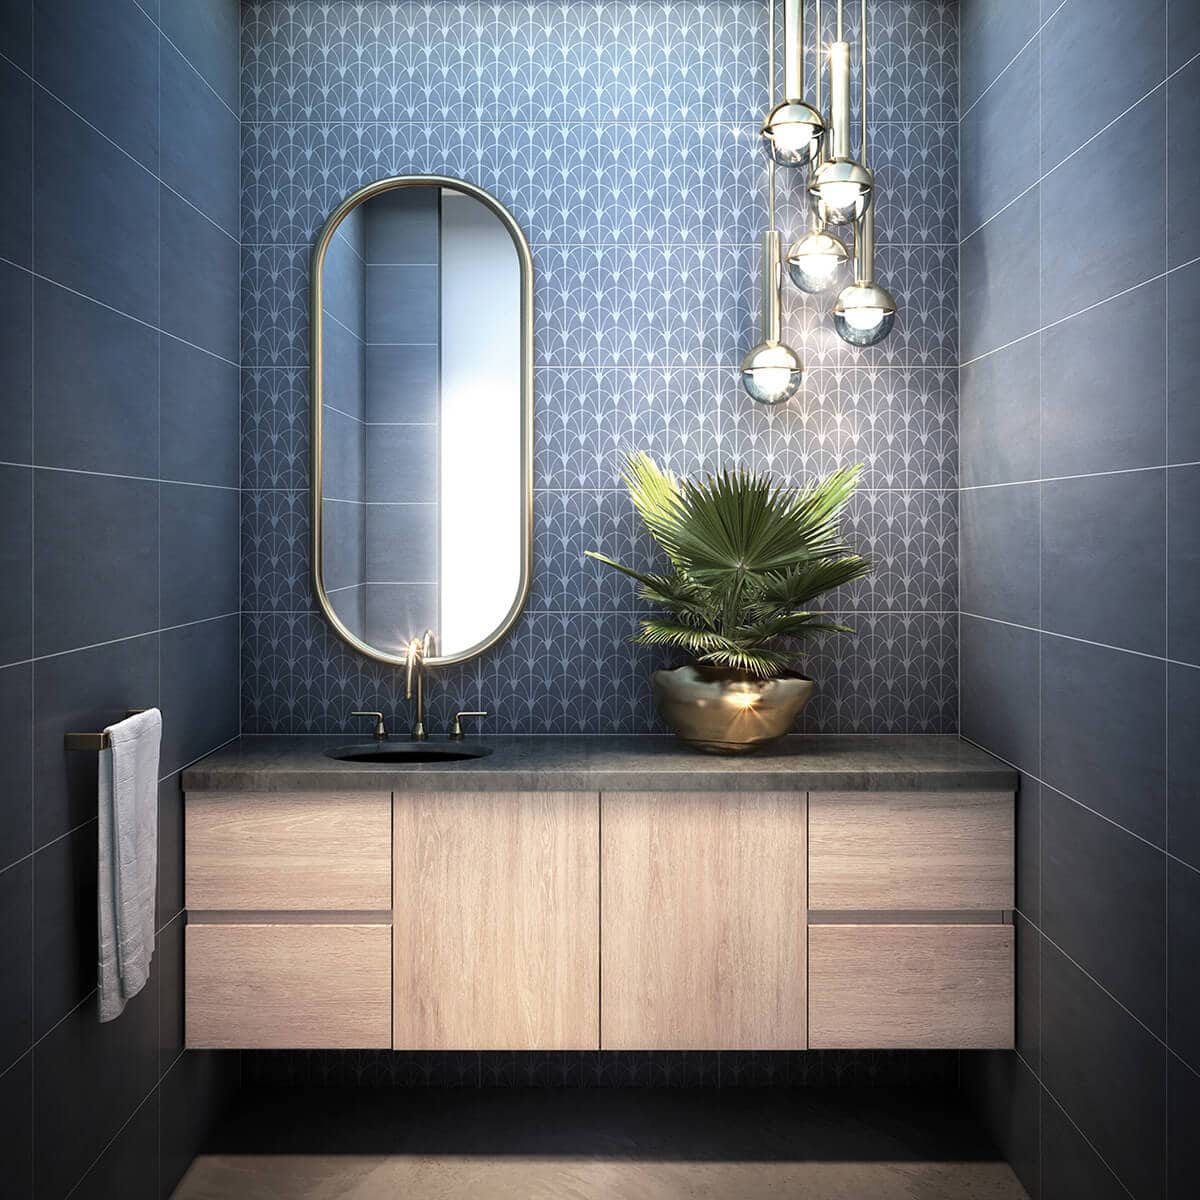 Blue bathroom tile with an art deco pattern
